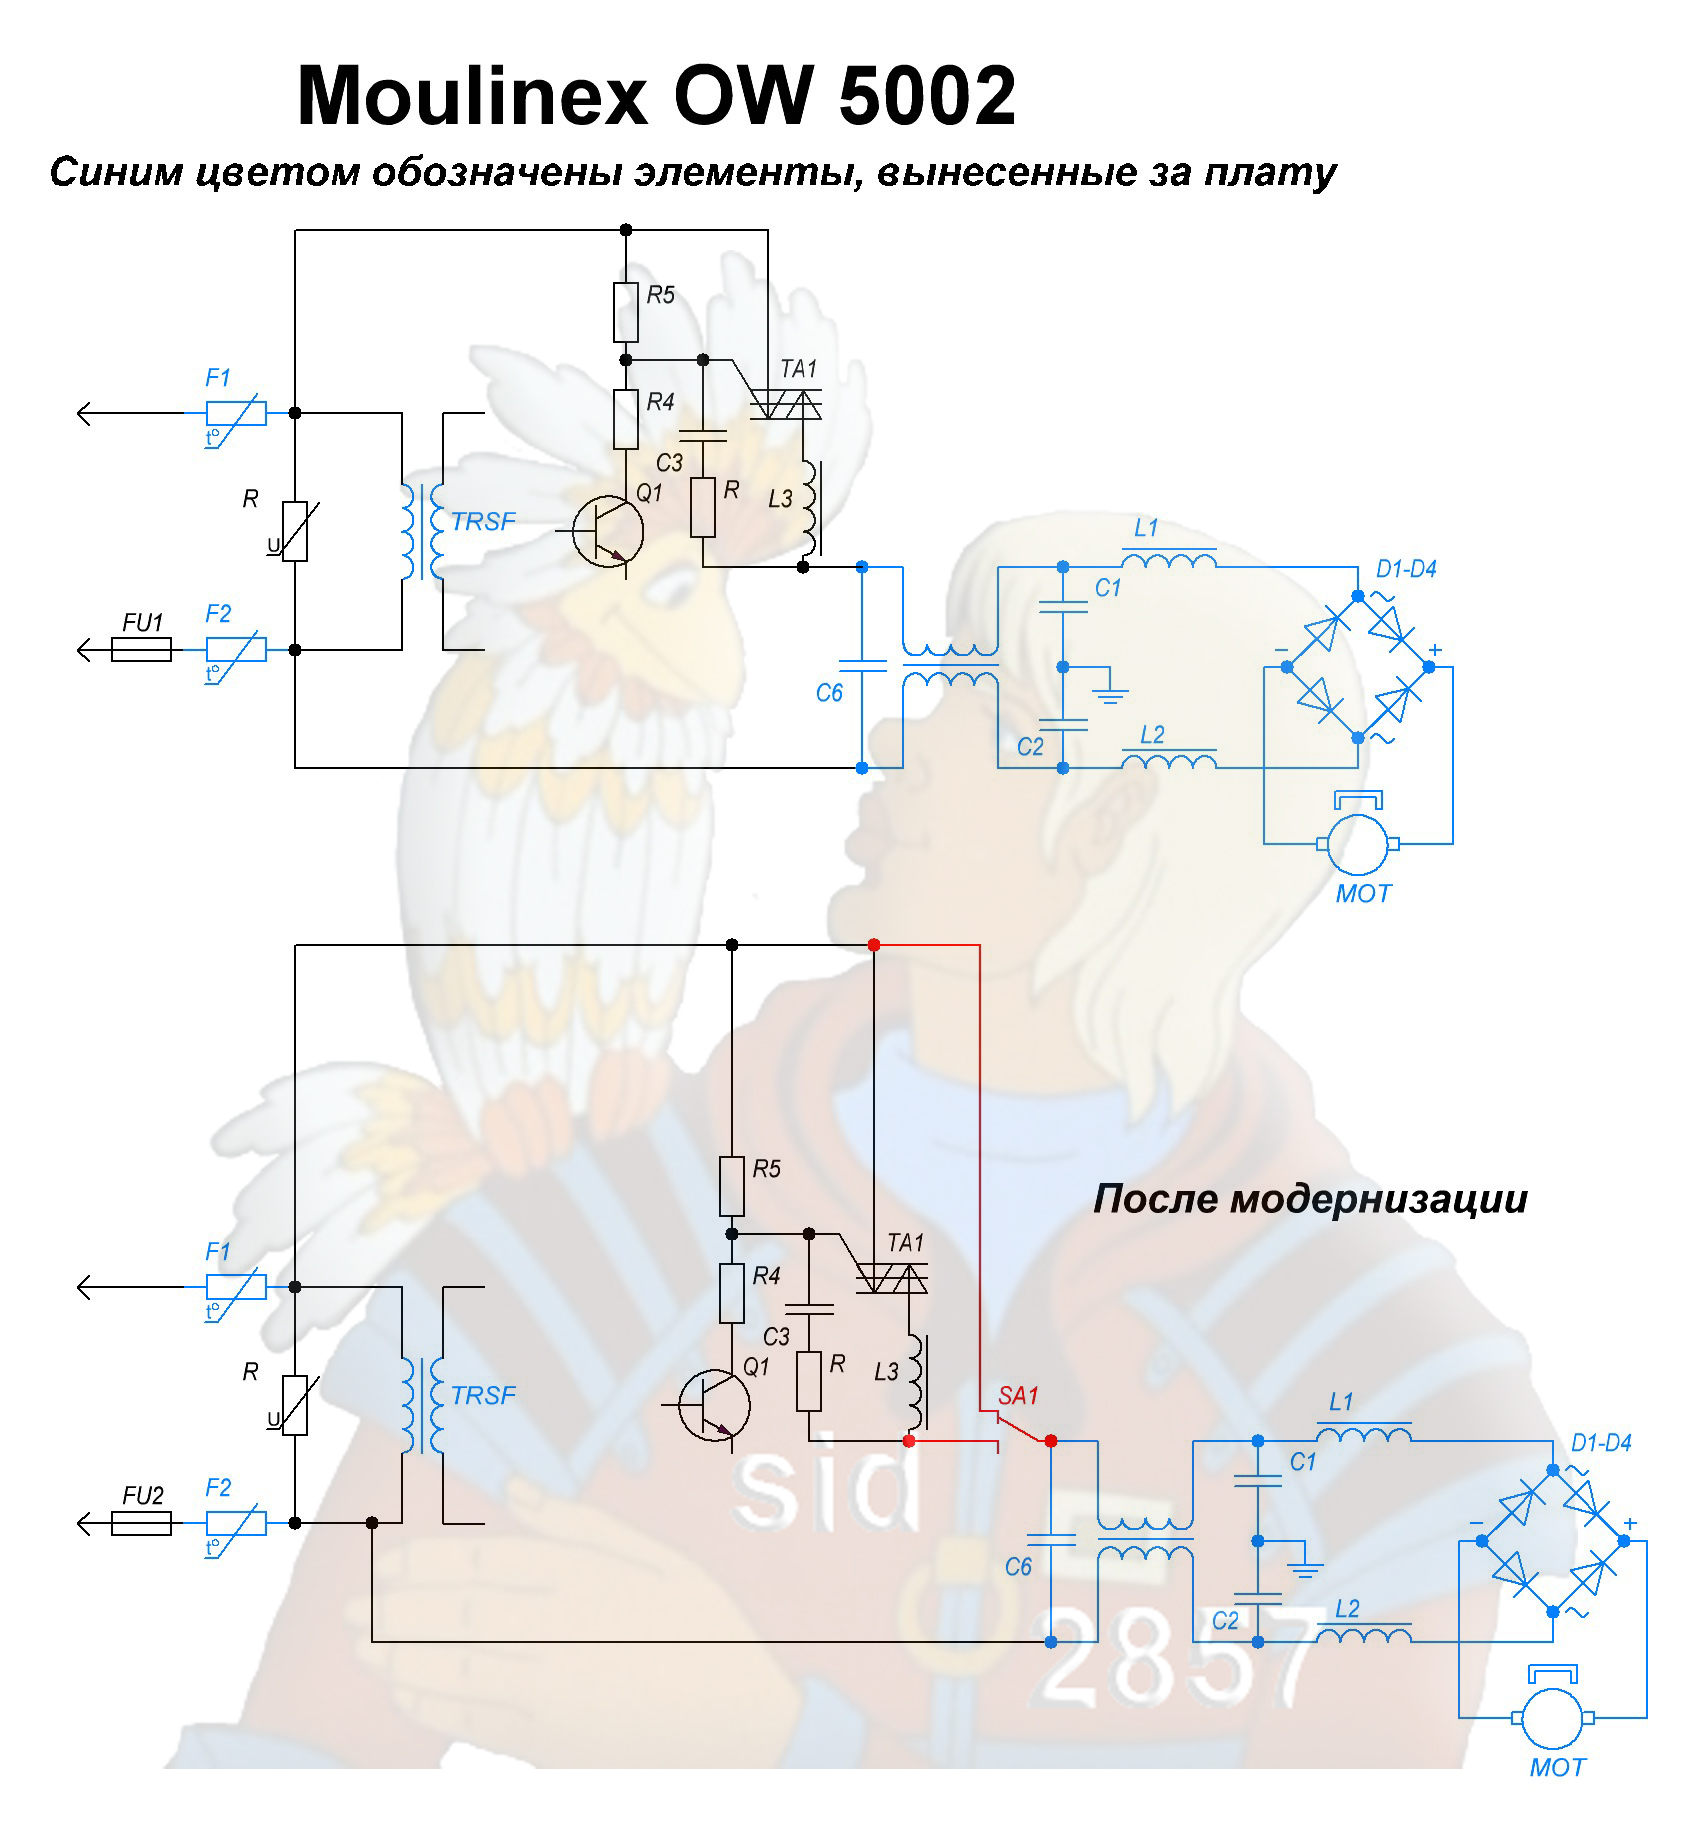 Repair of engine shutdown HP Moulinex 5002